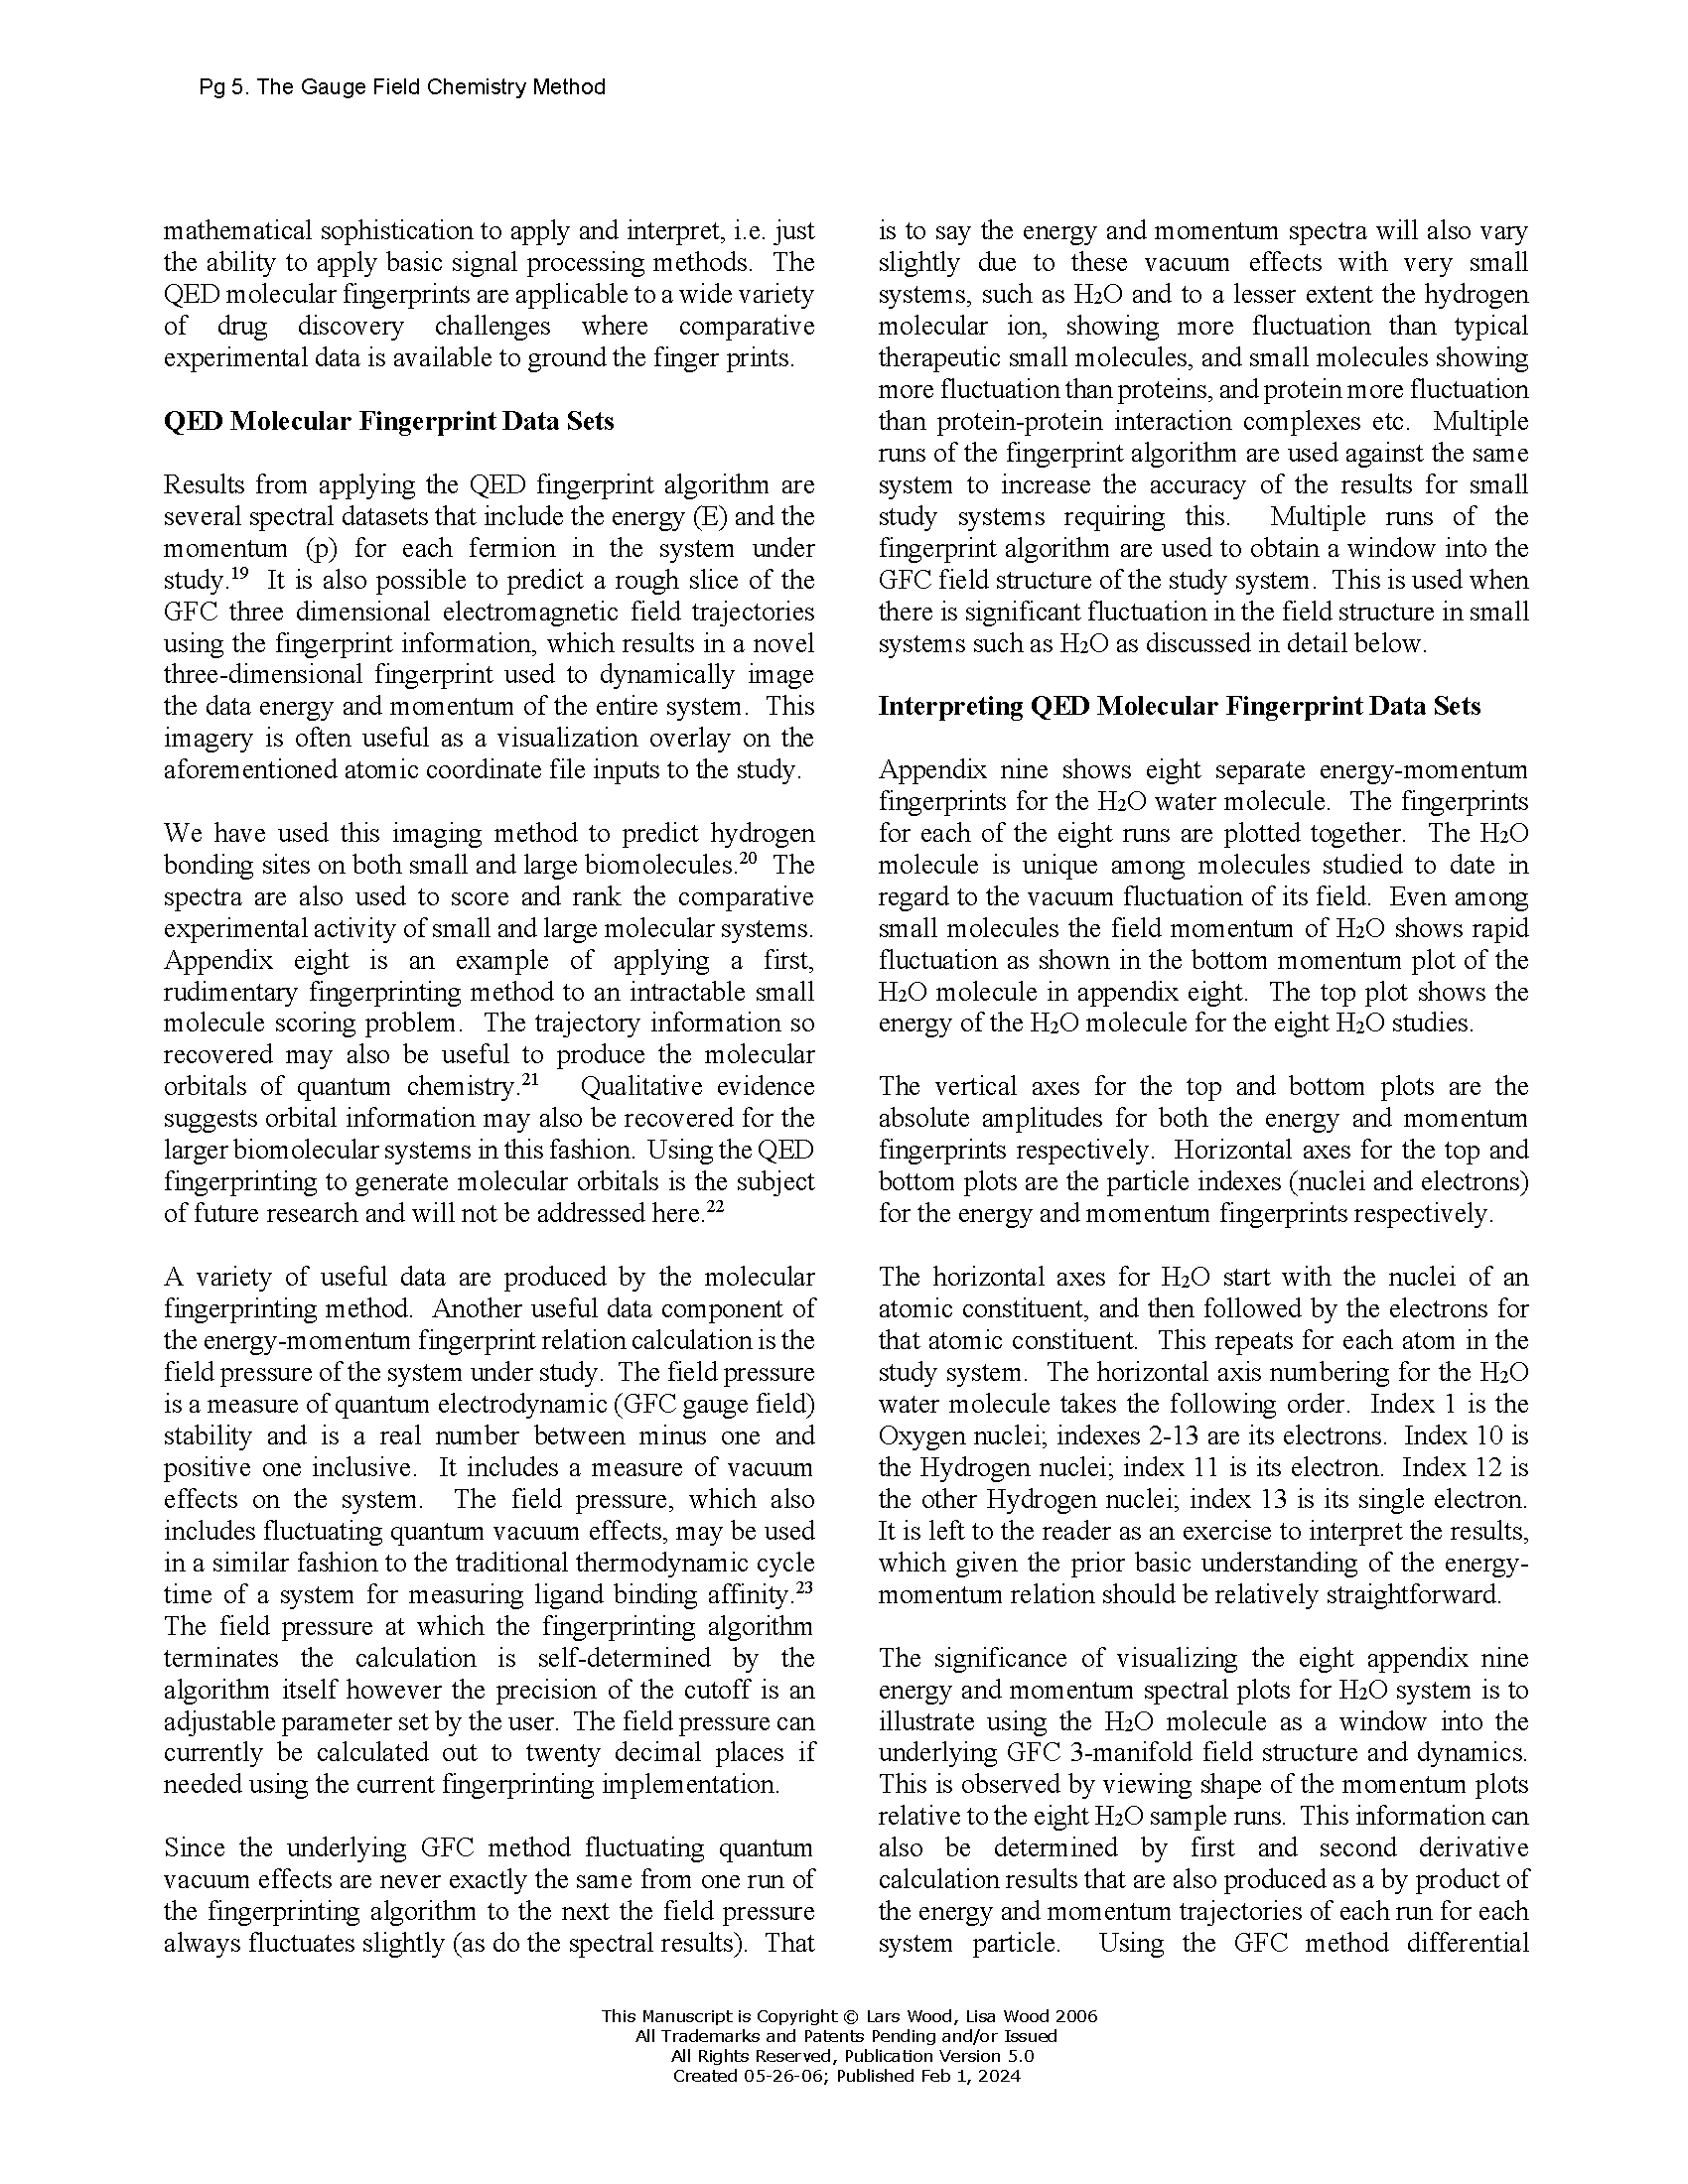 The Gauge Field Chemistry Method V5 Published_Page_05.png